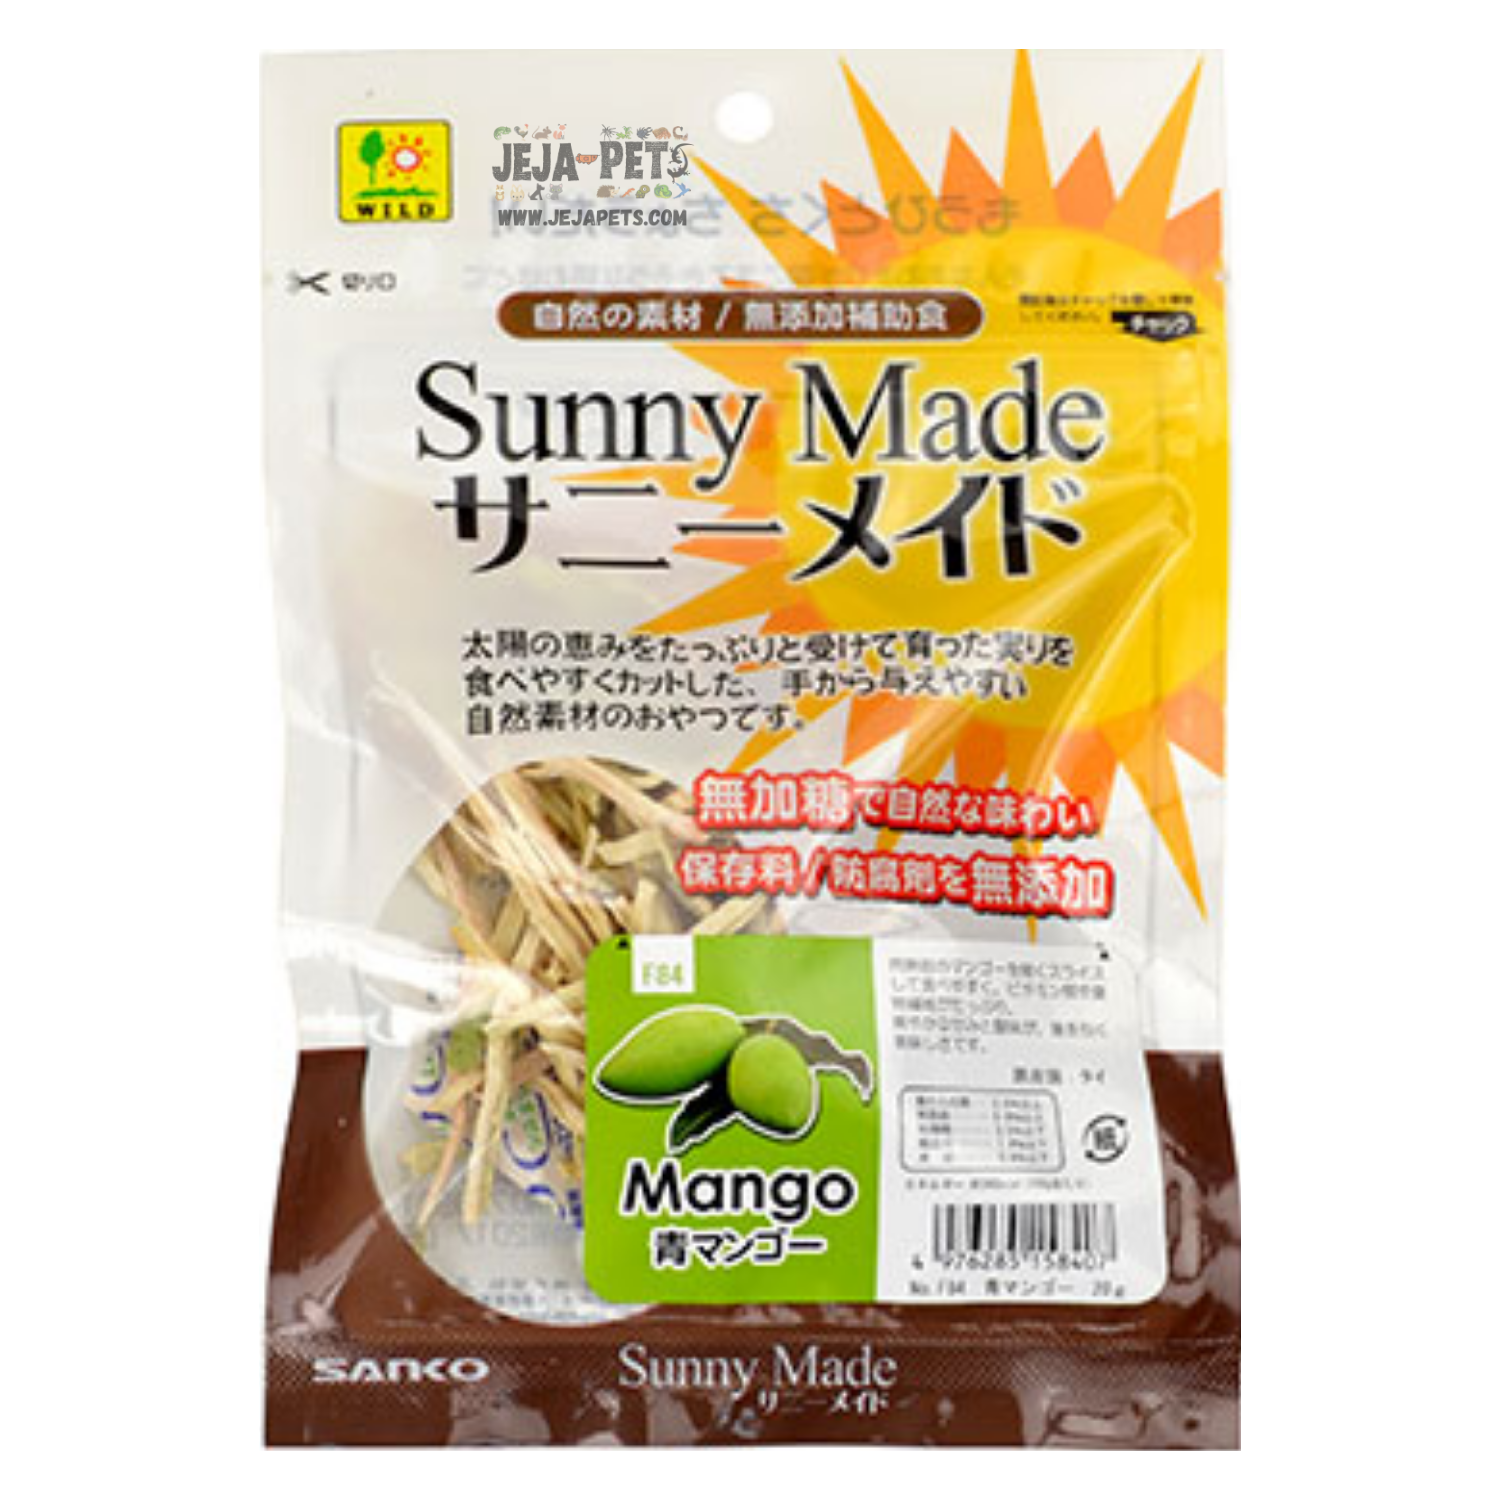 [DISCONTINUED] Sanko Wild Sunny Made Mango - 20g